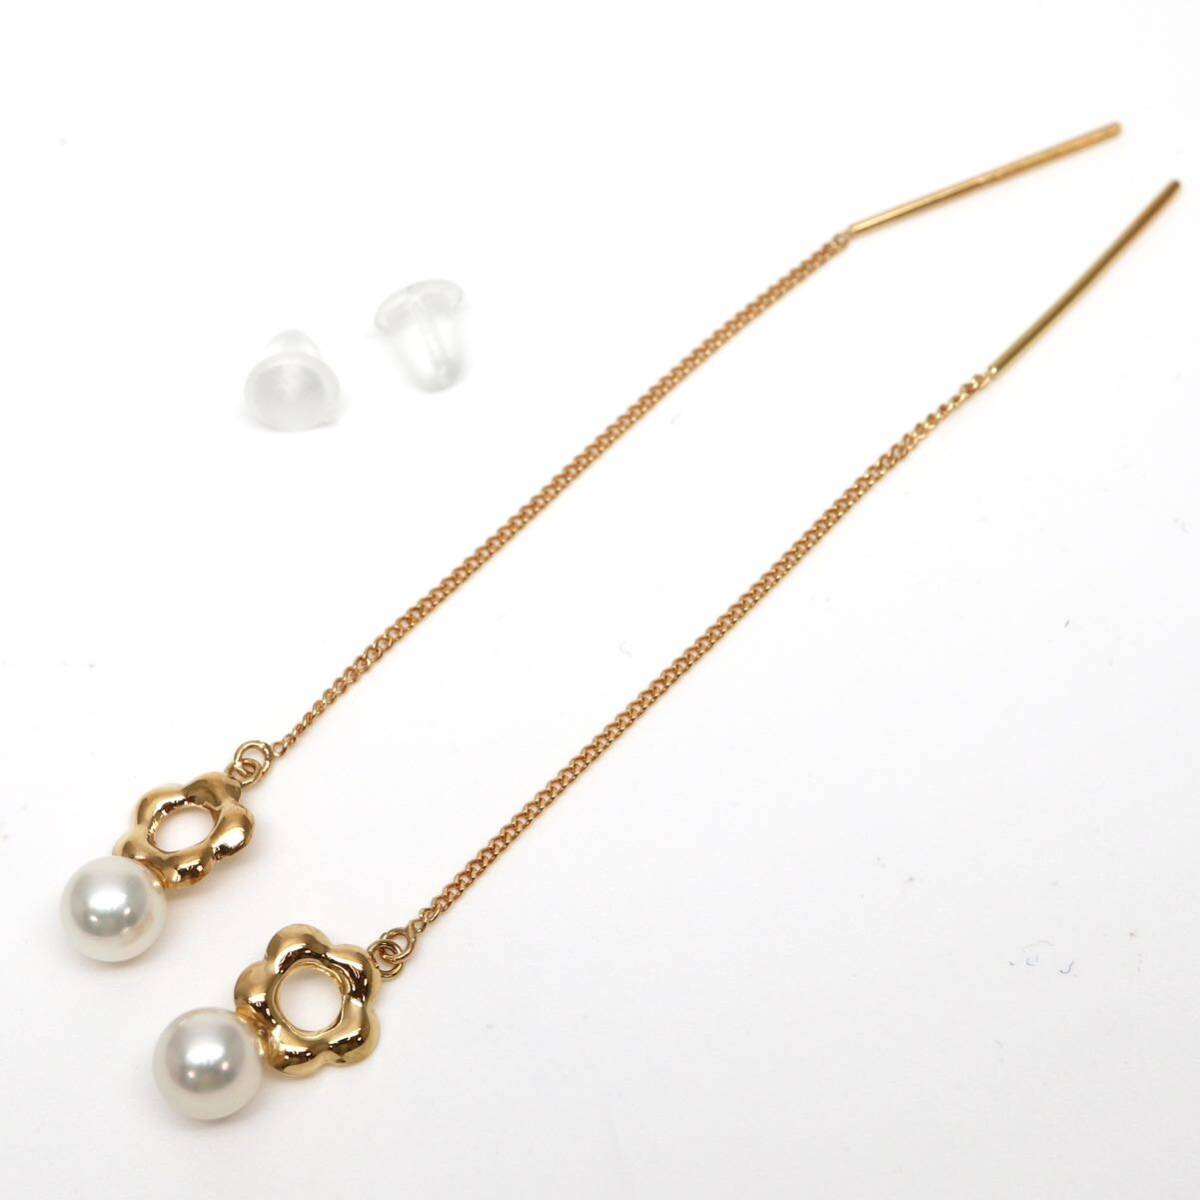 ◆K18 アコヤ本真珠アメリカンピアス◆M 約0.9g 4.5mm珠 パール pearl diamond ジュエリー necklace jewelry DD0_画像3